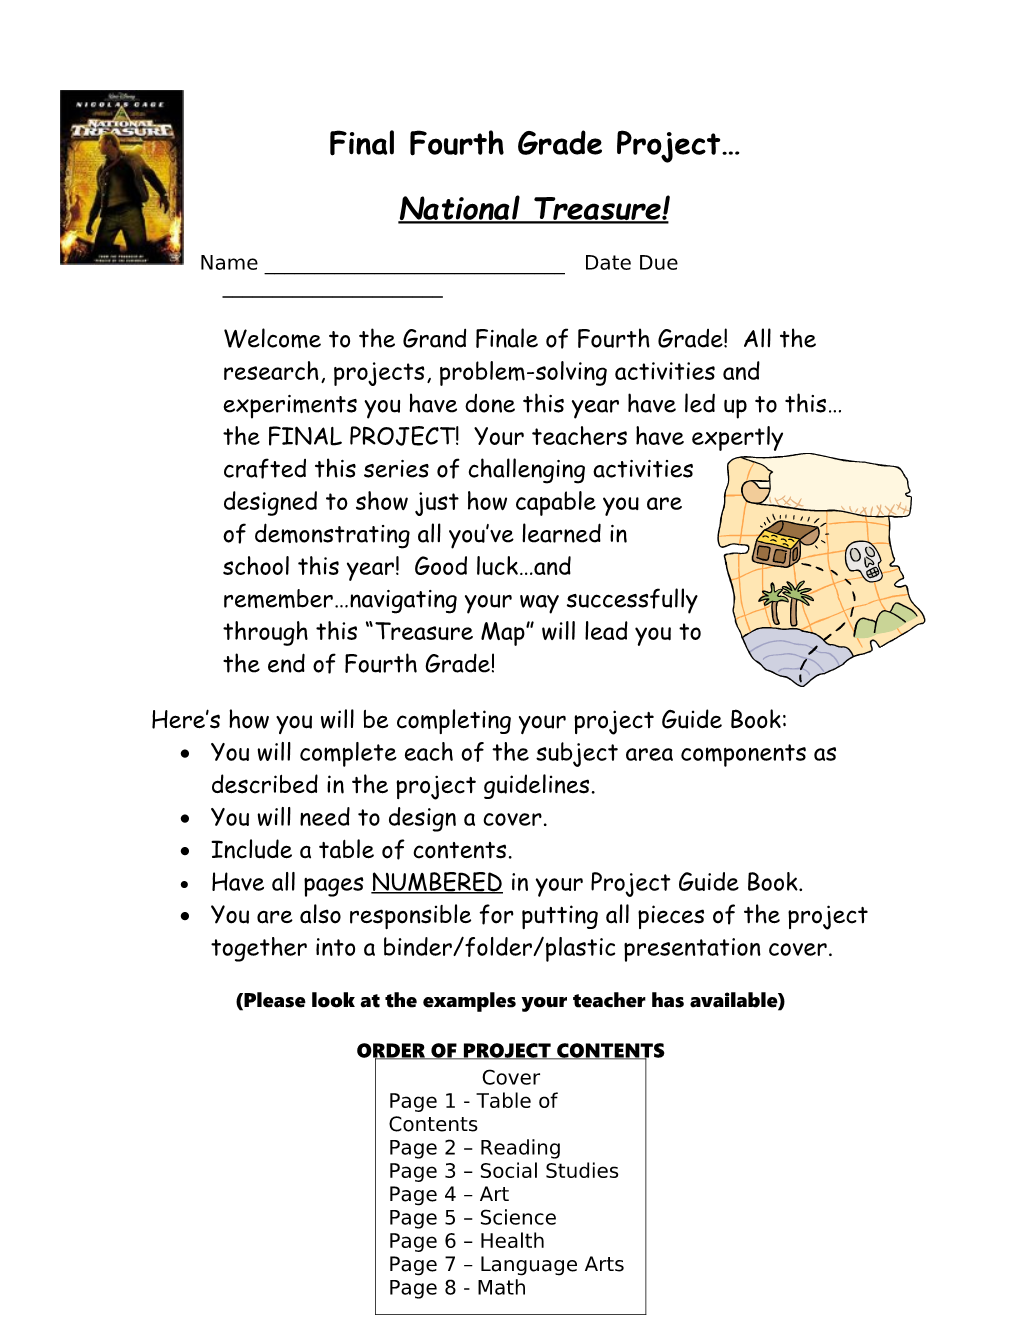 Final Fourth Grade Project National Treasure